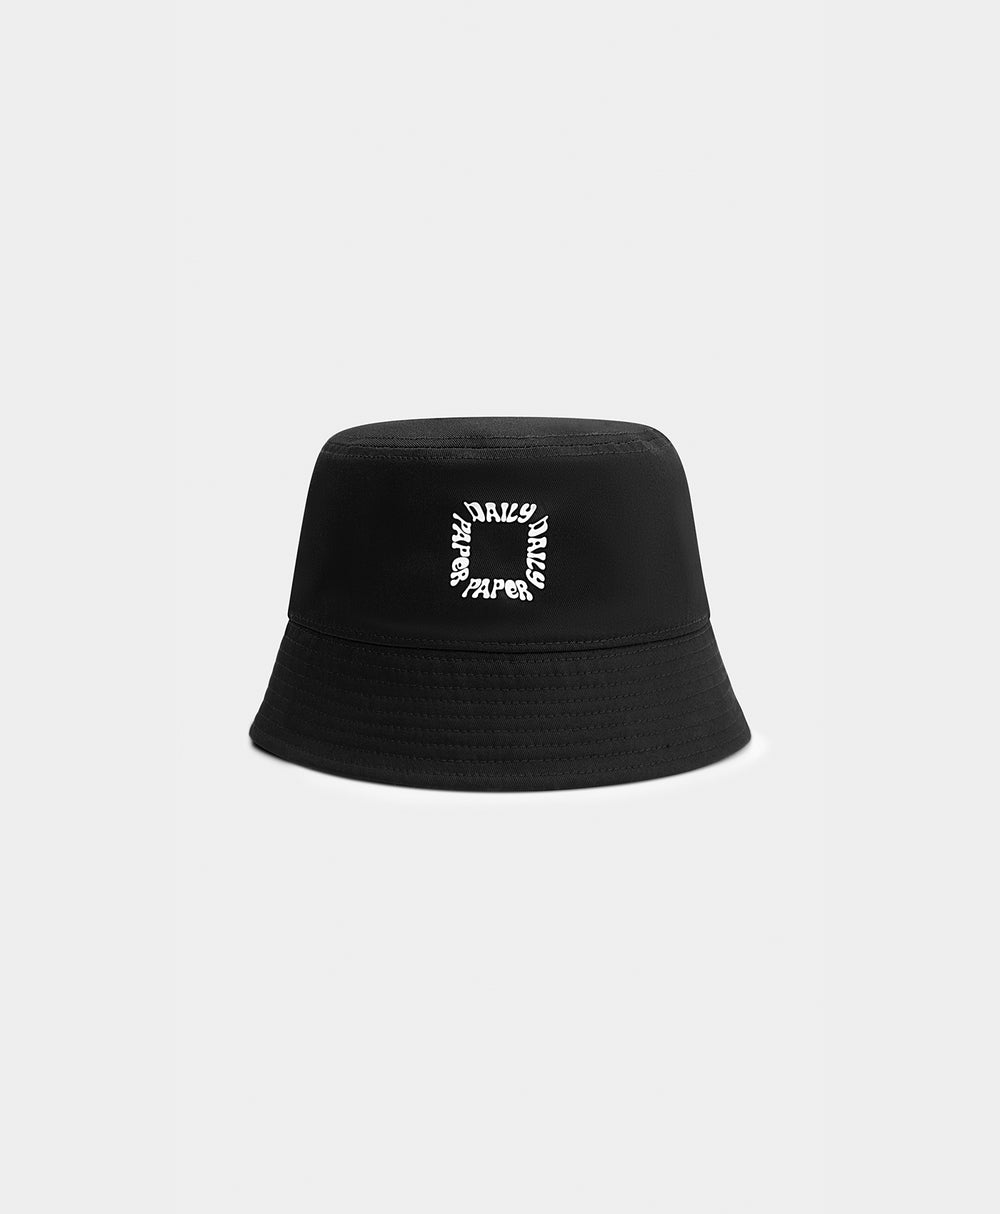 DP - Black Pobu Bucket Hat - Packshot - Front Rear